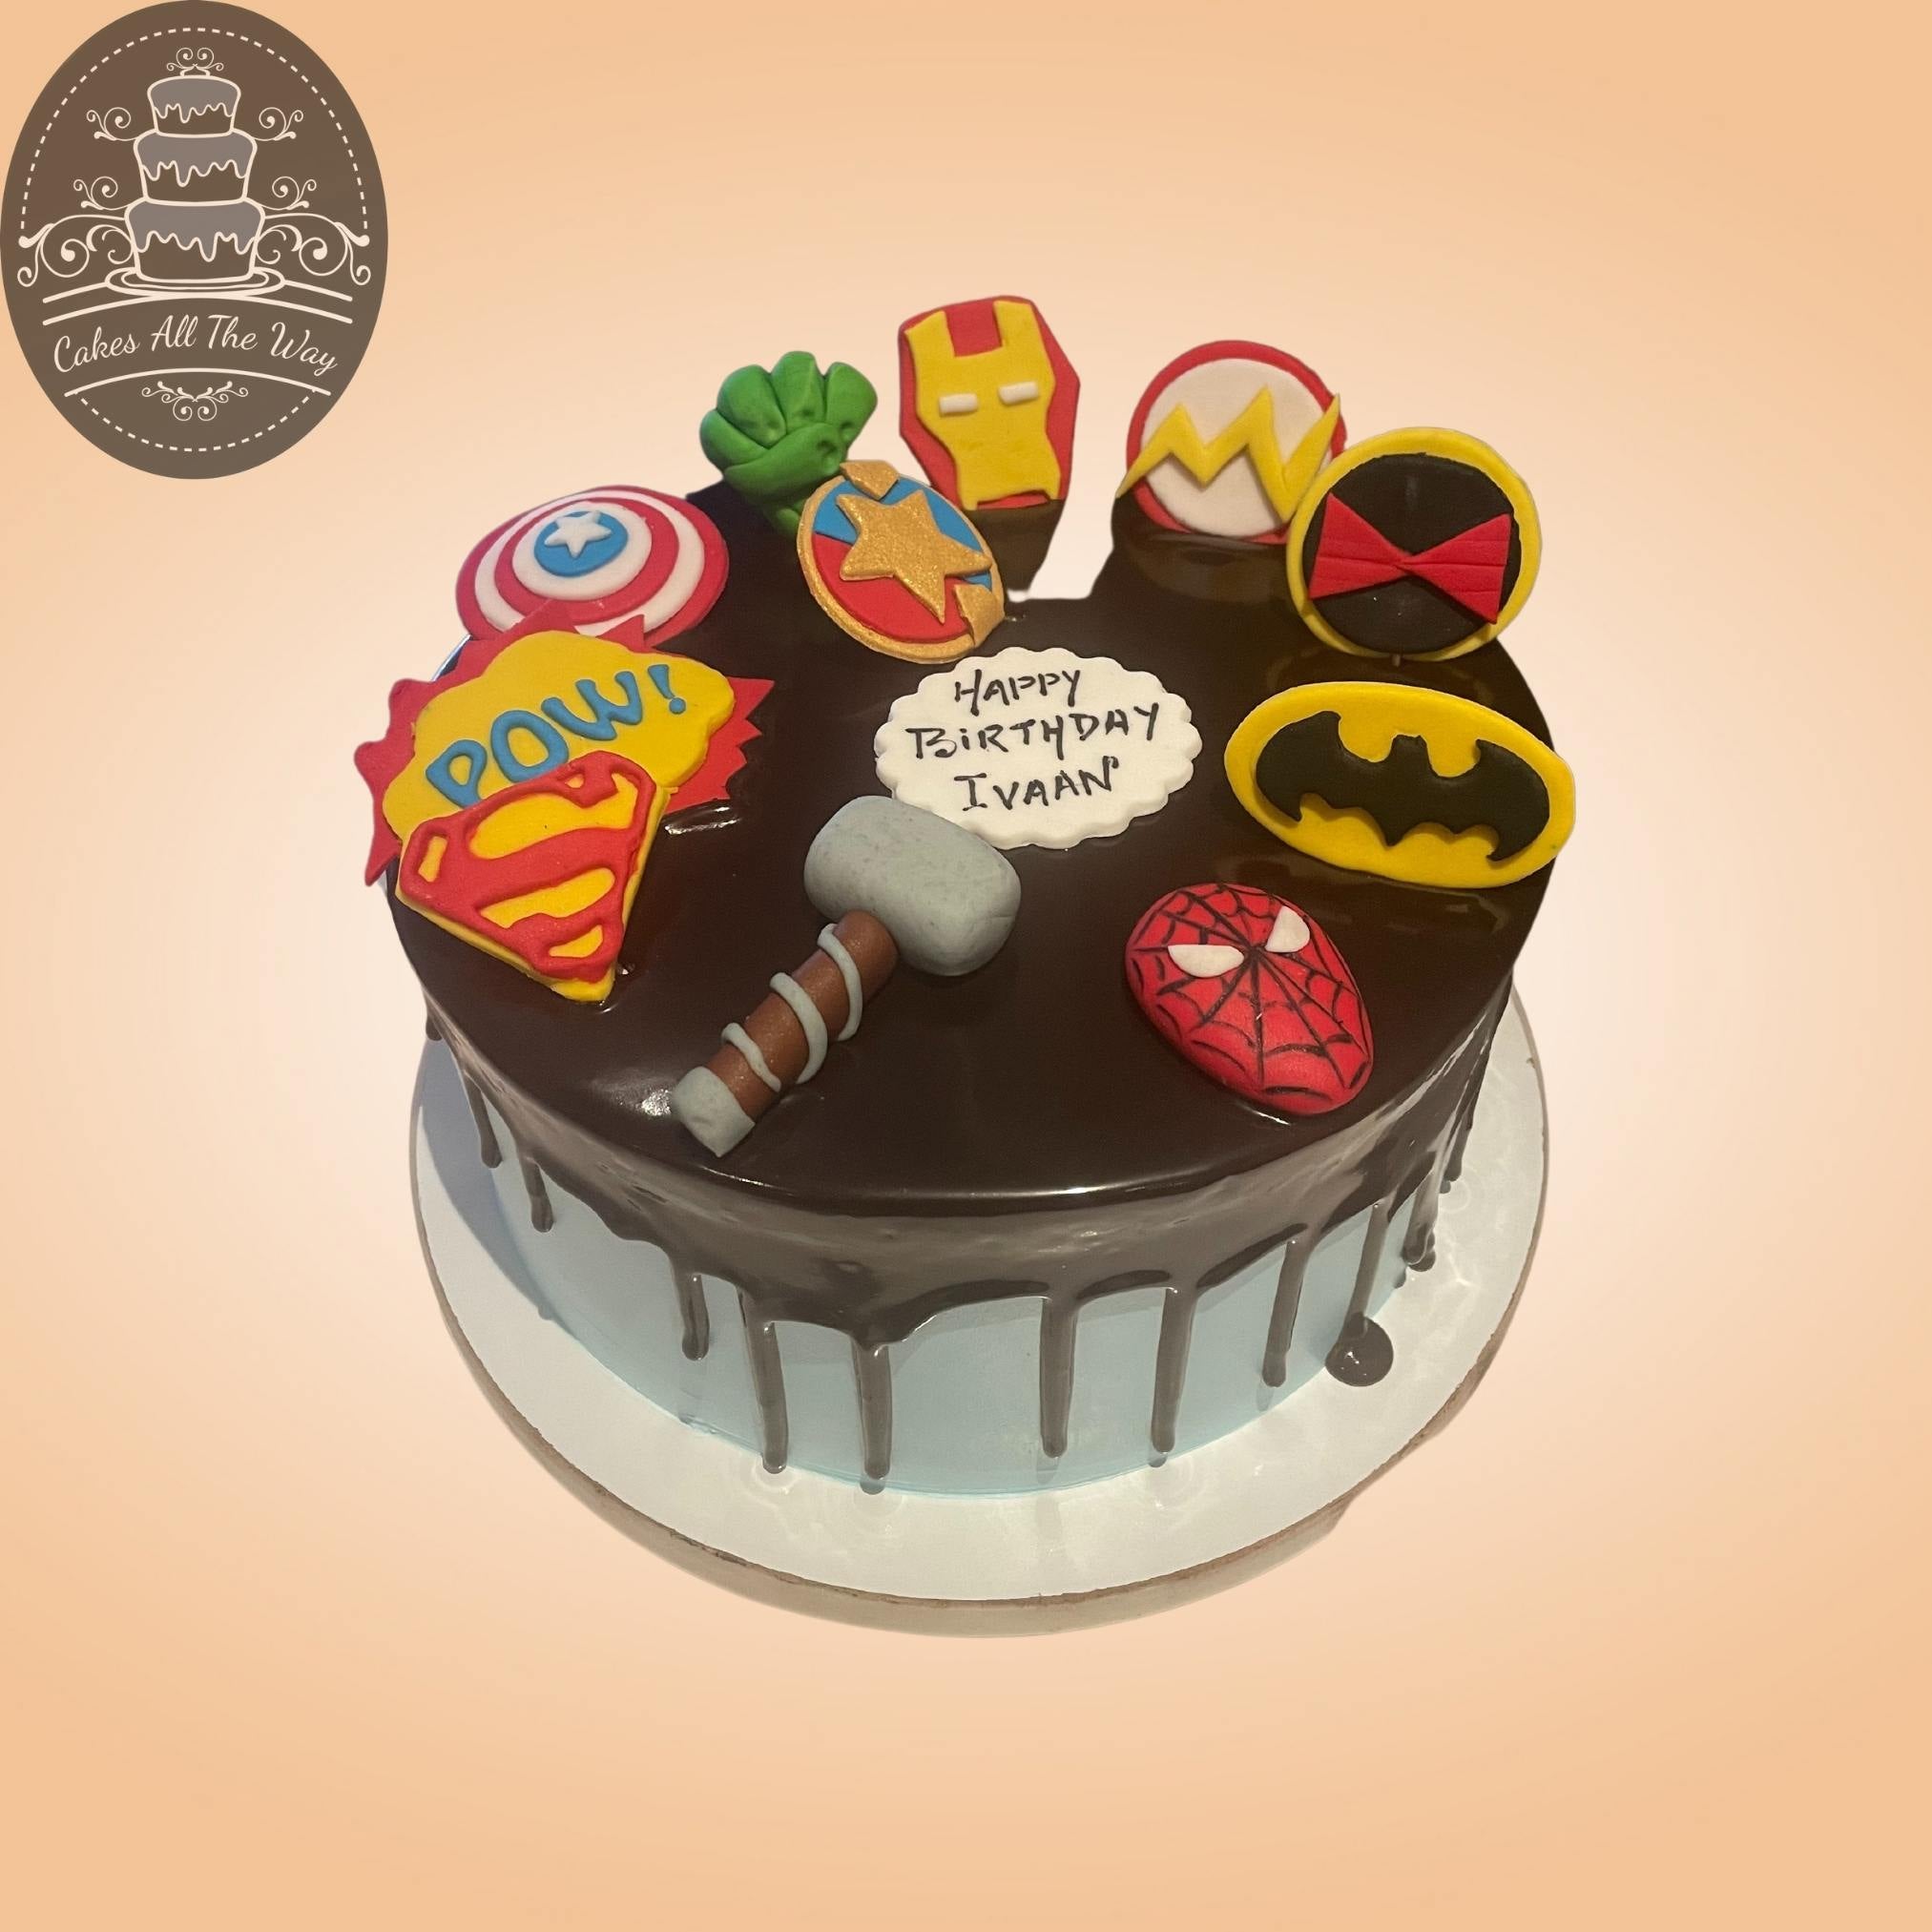 Superhero Cakes - Flecks Cakes